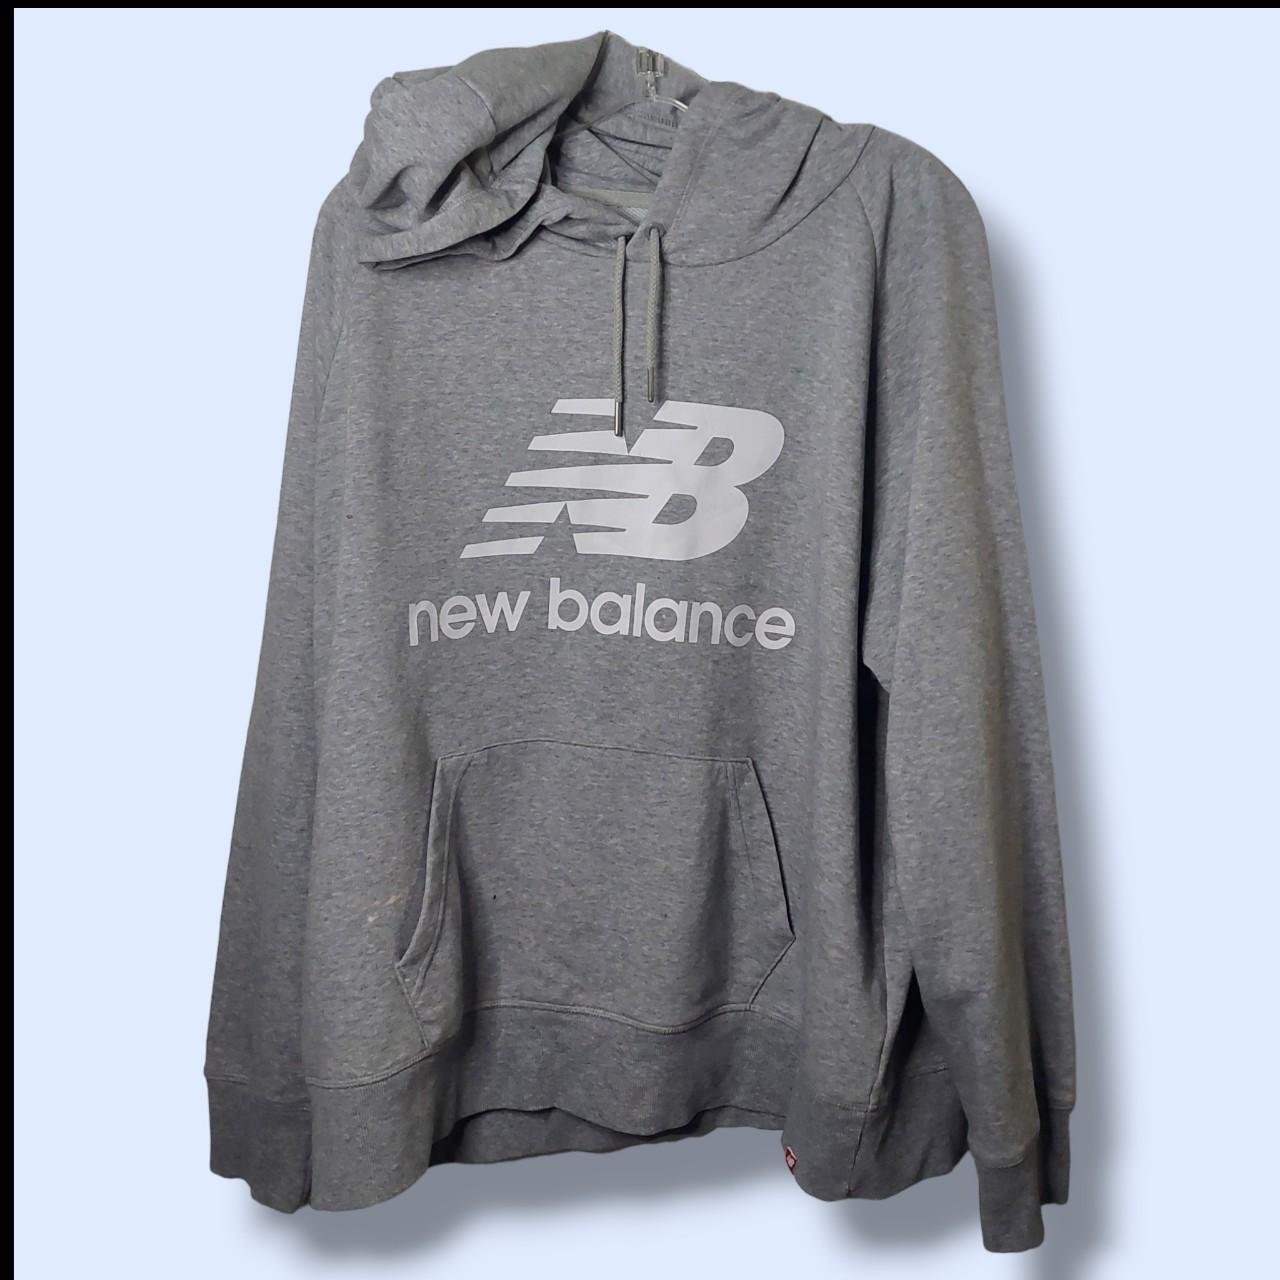 New Balance Women's Grey Sweatshirt (2)